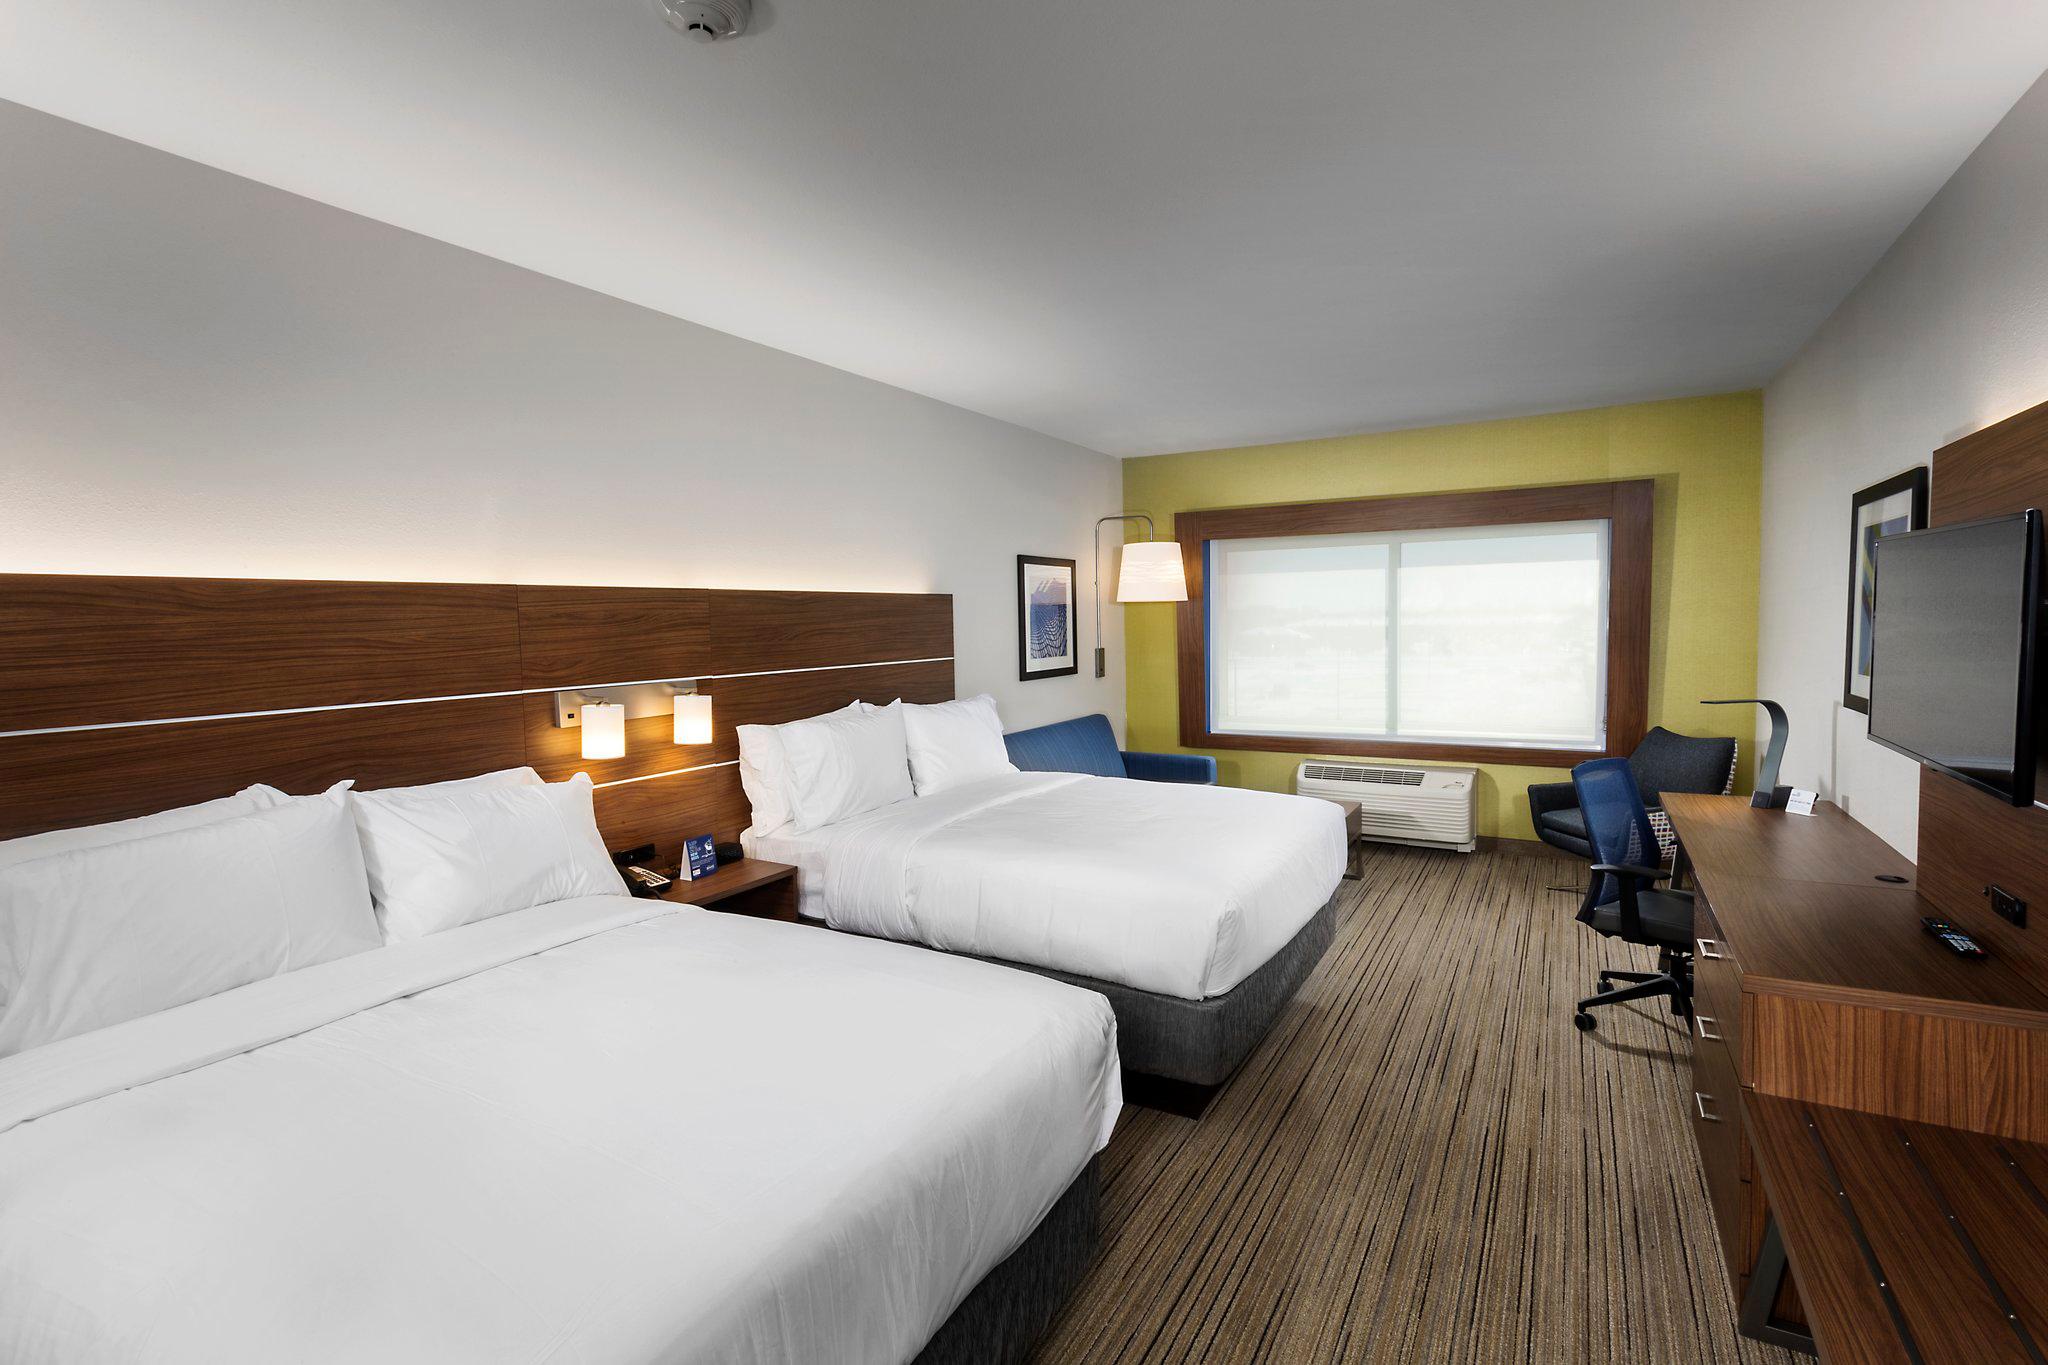 Holiday Inn Express & Suites West Des Moines - Jordan West, an IHG Hotel West Des Moines (515)223-4050